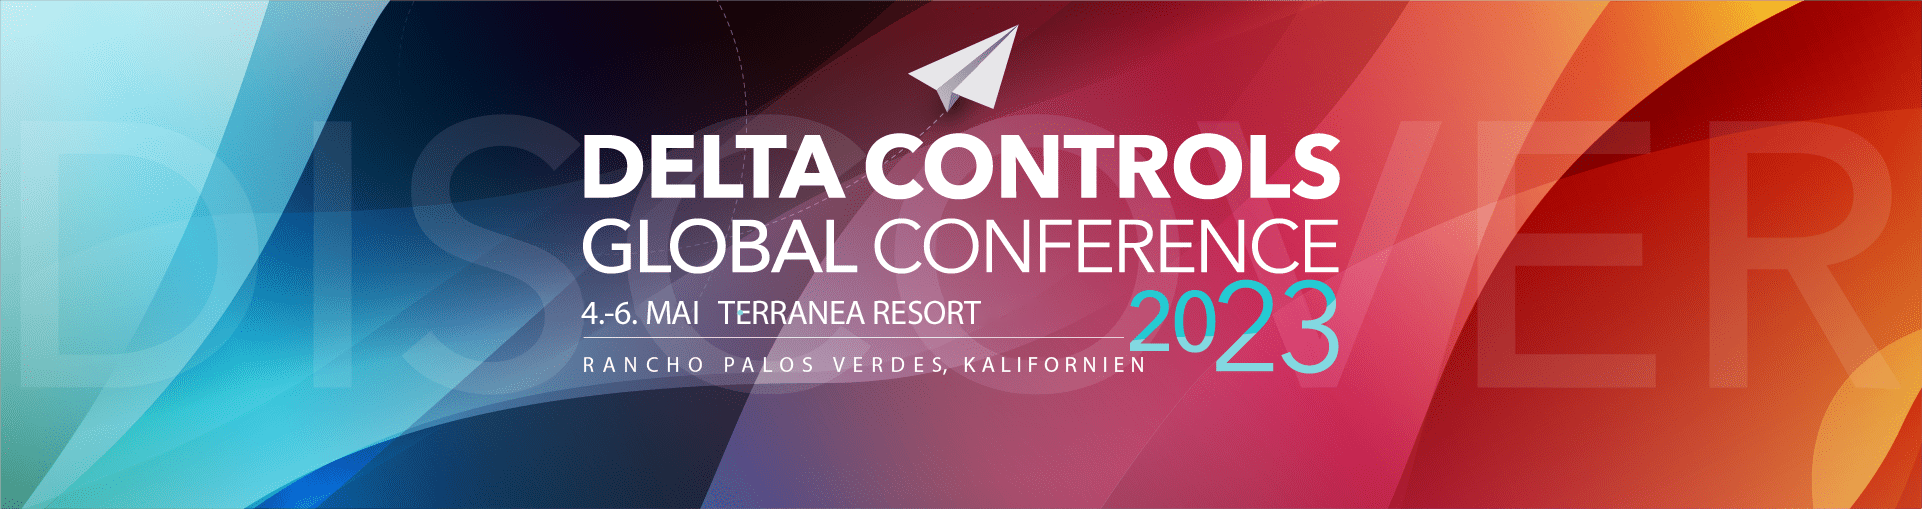 Global Conference 2023 Delta Controls